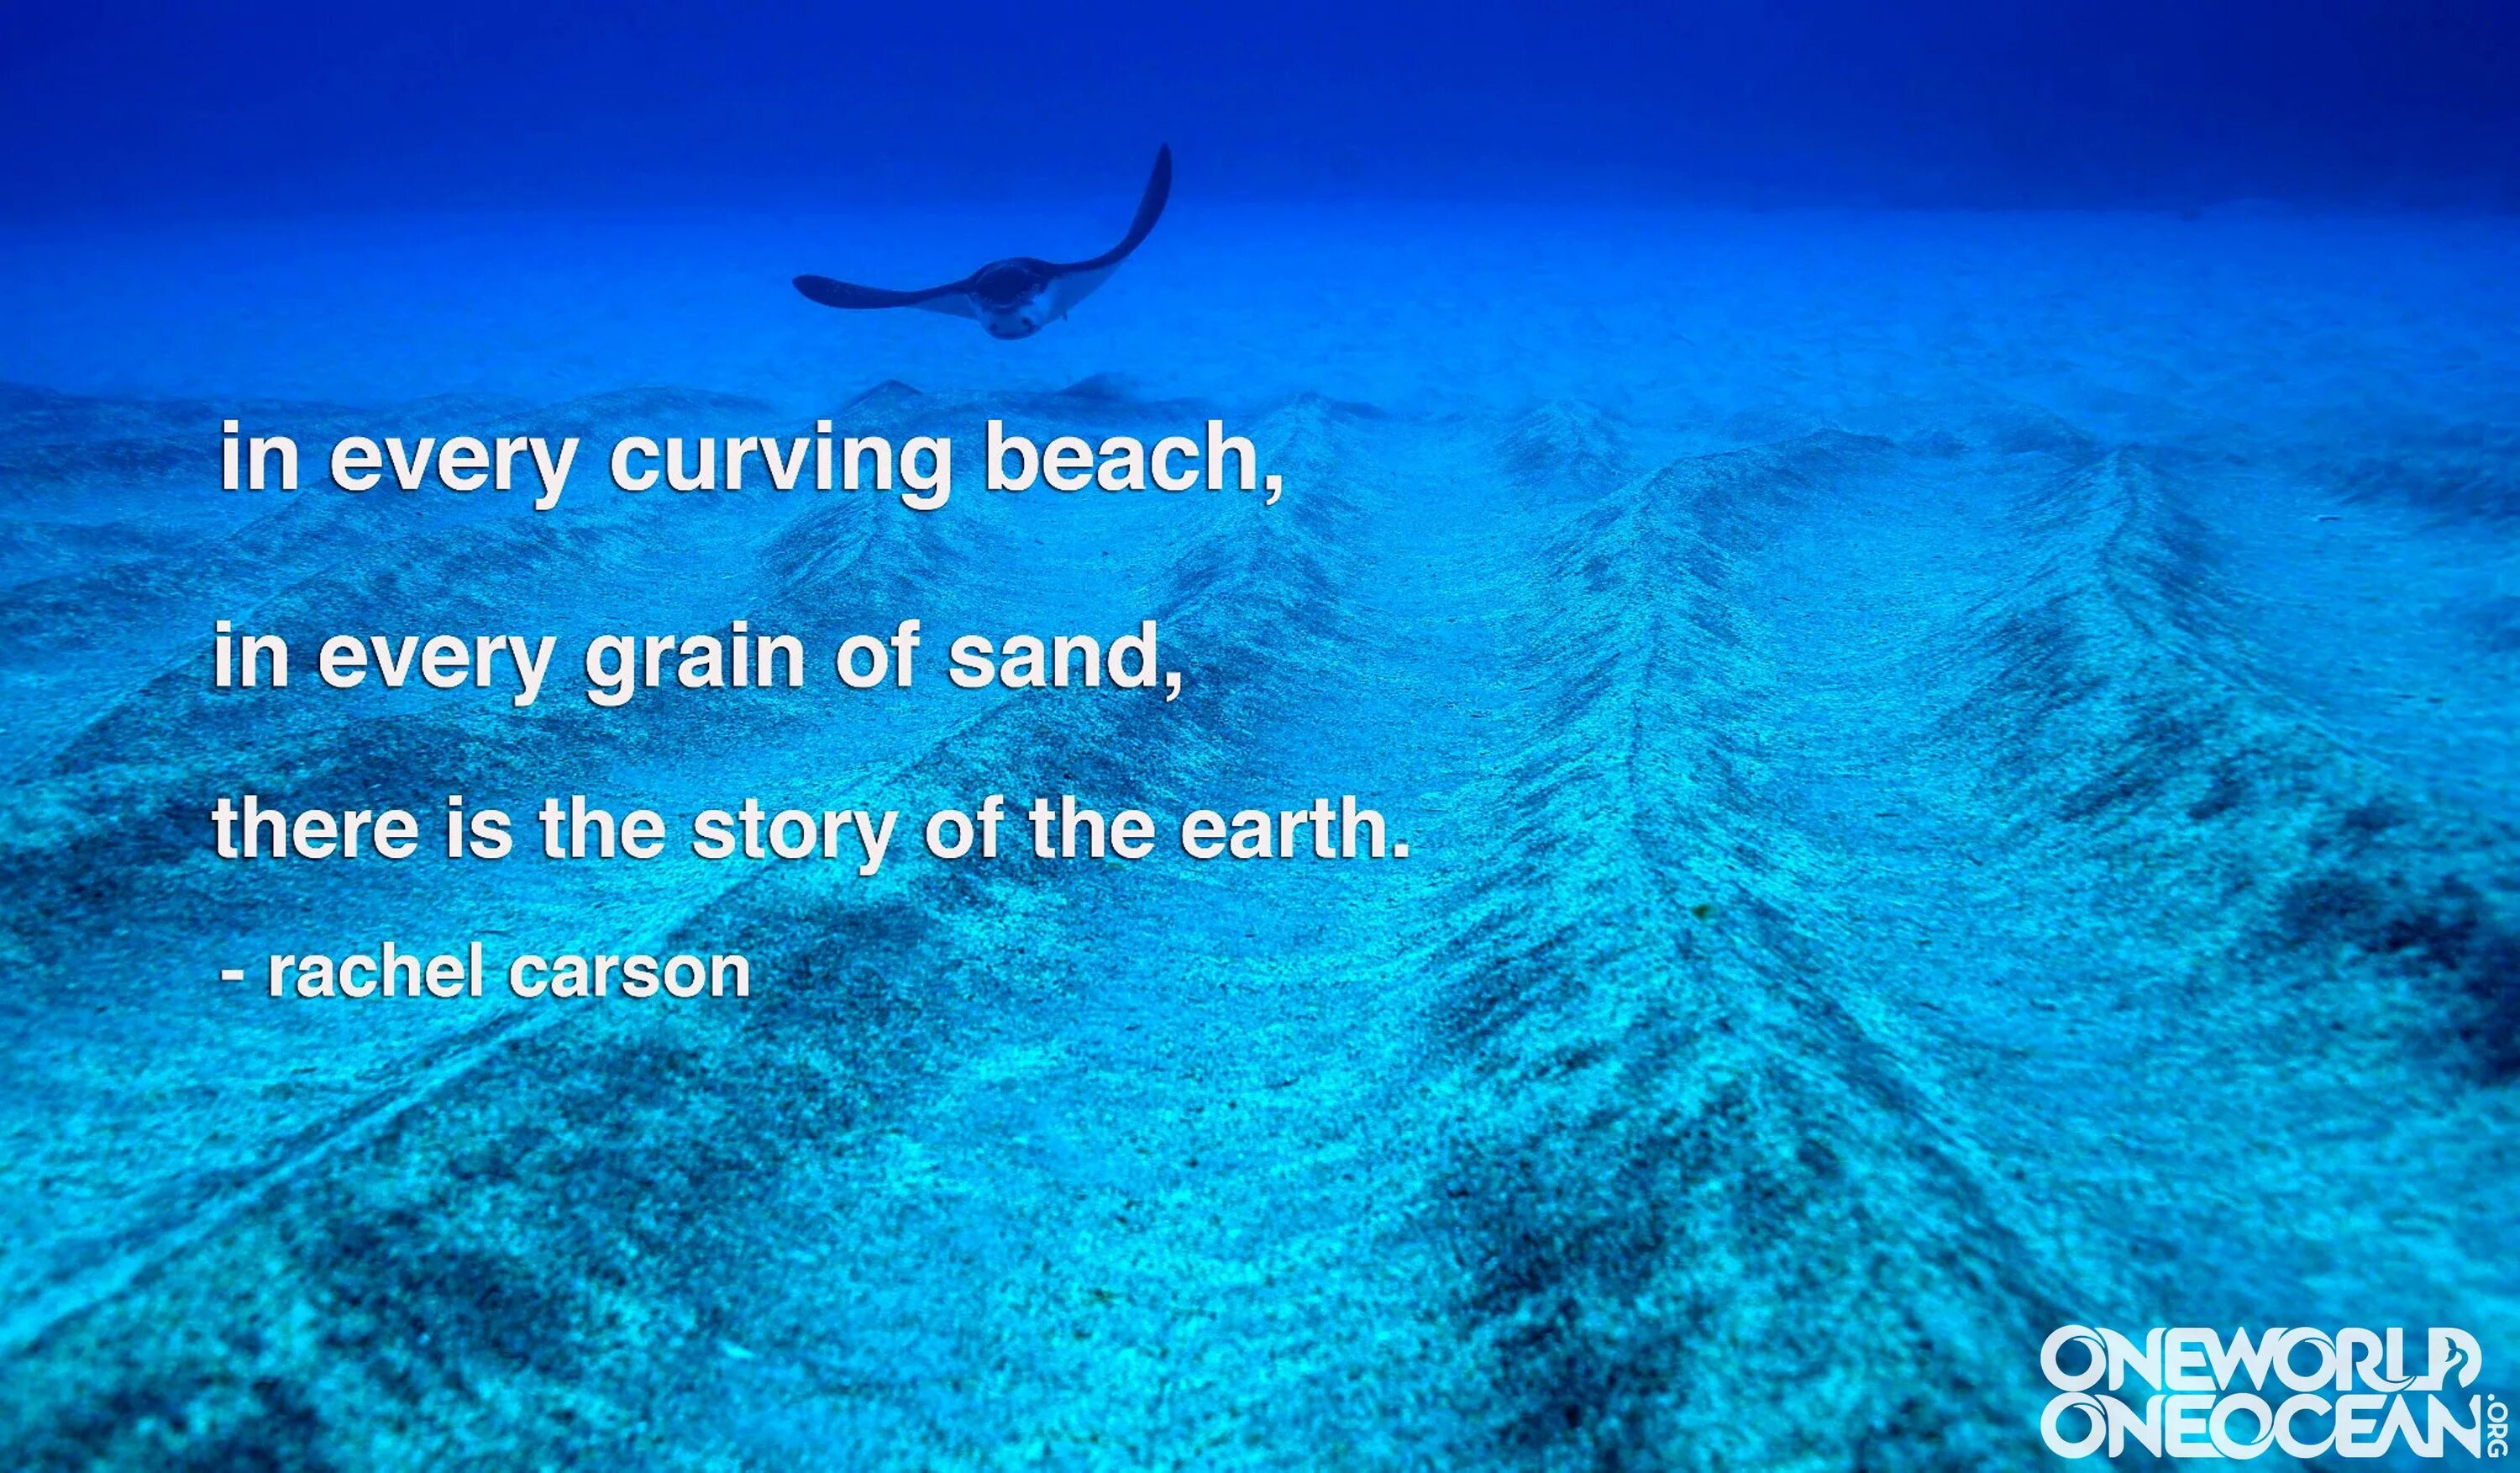 Загадка про океан. Высказывания про океан. Фразы про океан. Цитаты про океан. Крылатые выражения про океан.